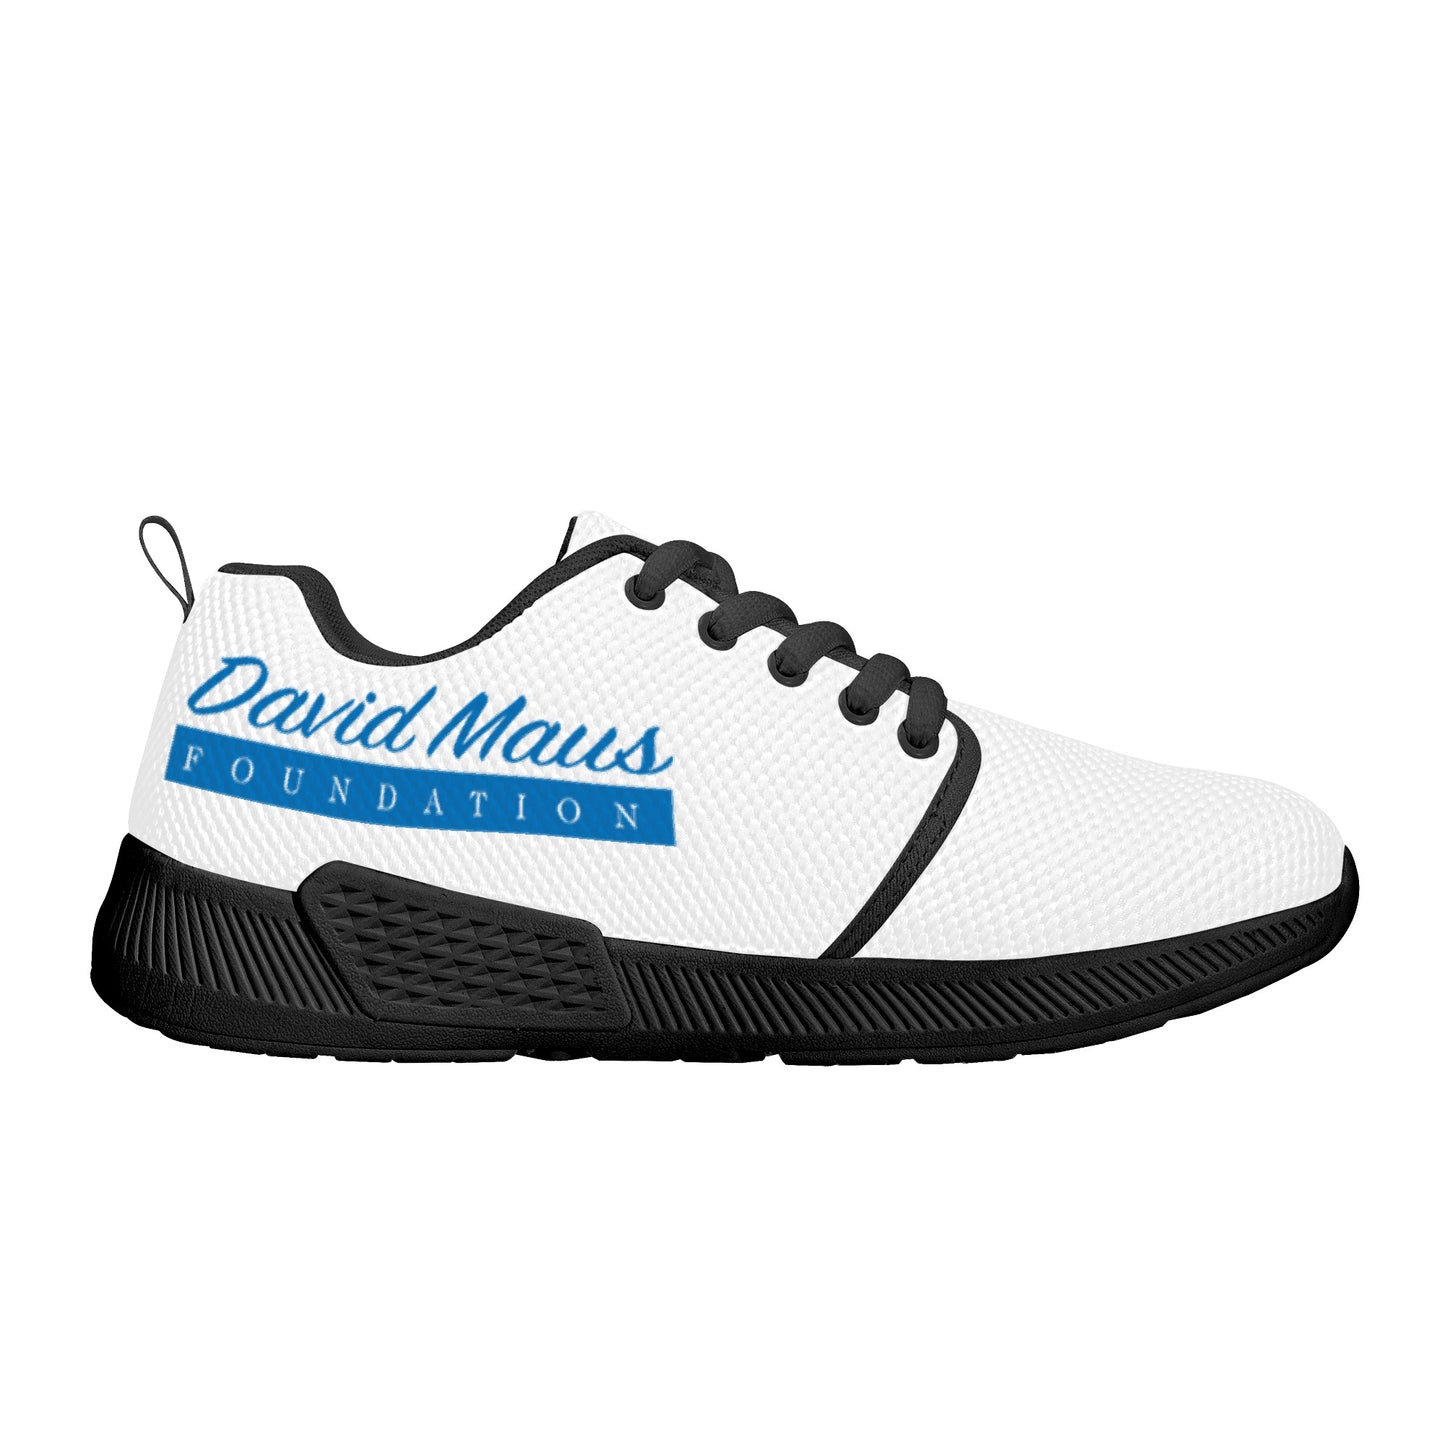 Mesh Sneakers - Black Sole - David Maus Foundation